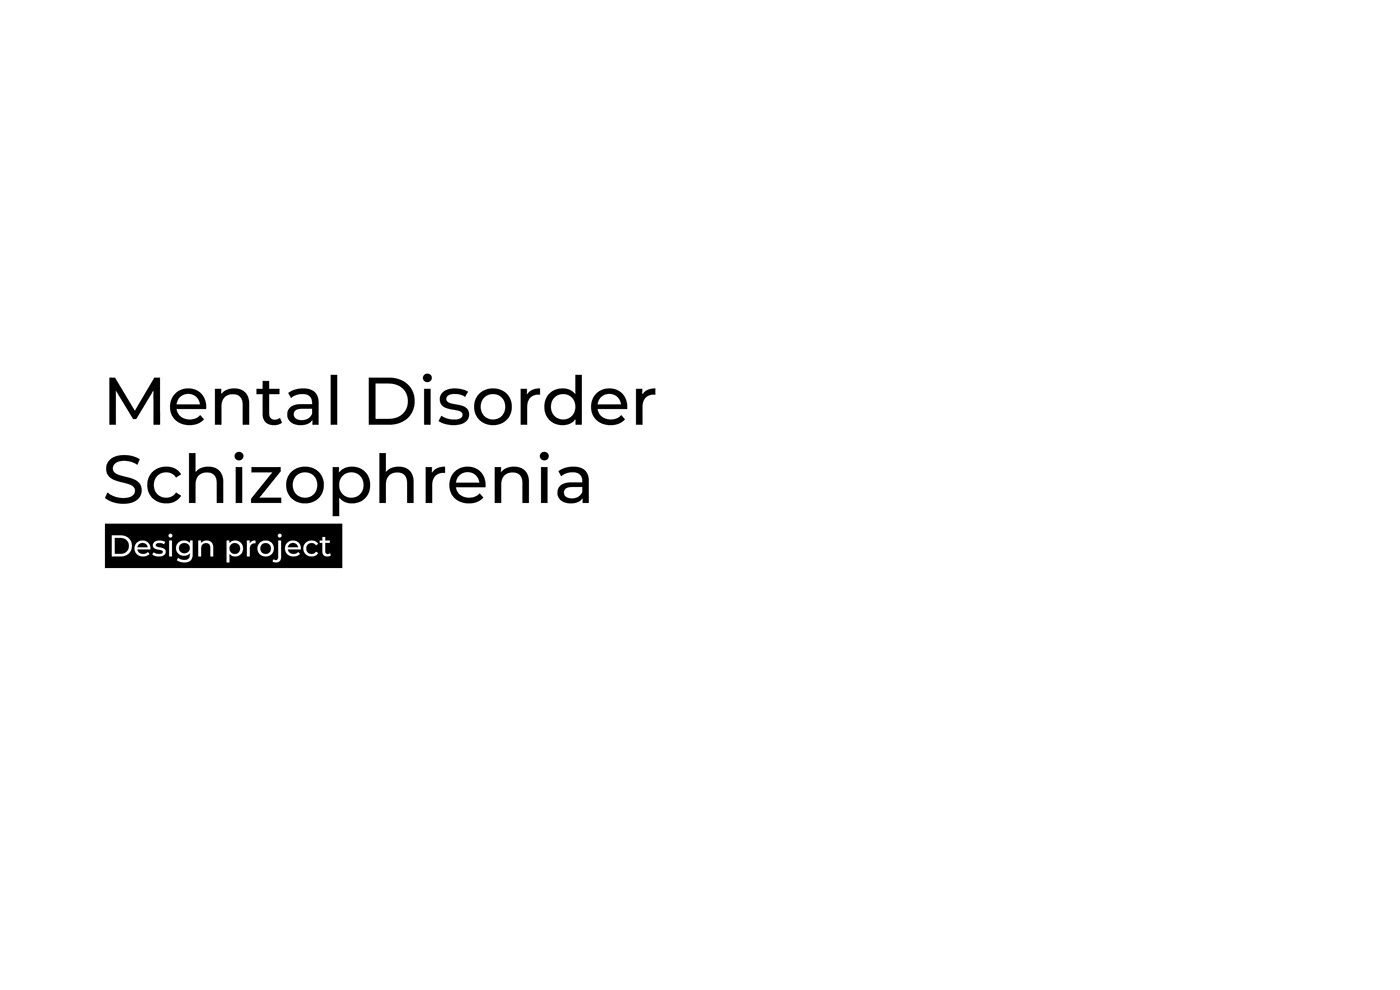 Schizophrenia mental disorder awareness posters World Mental Health